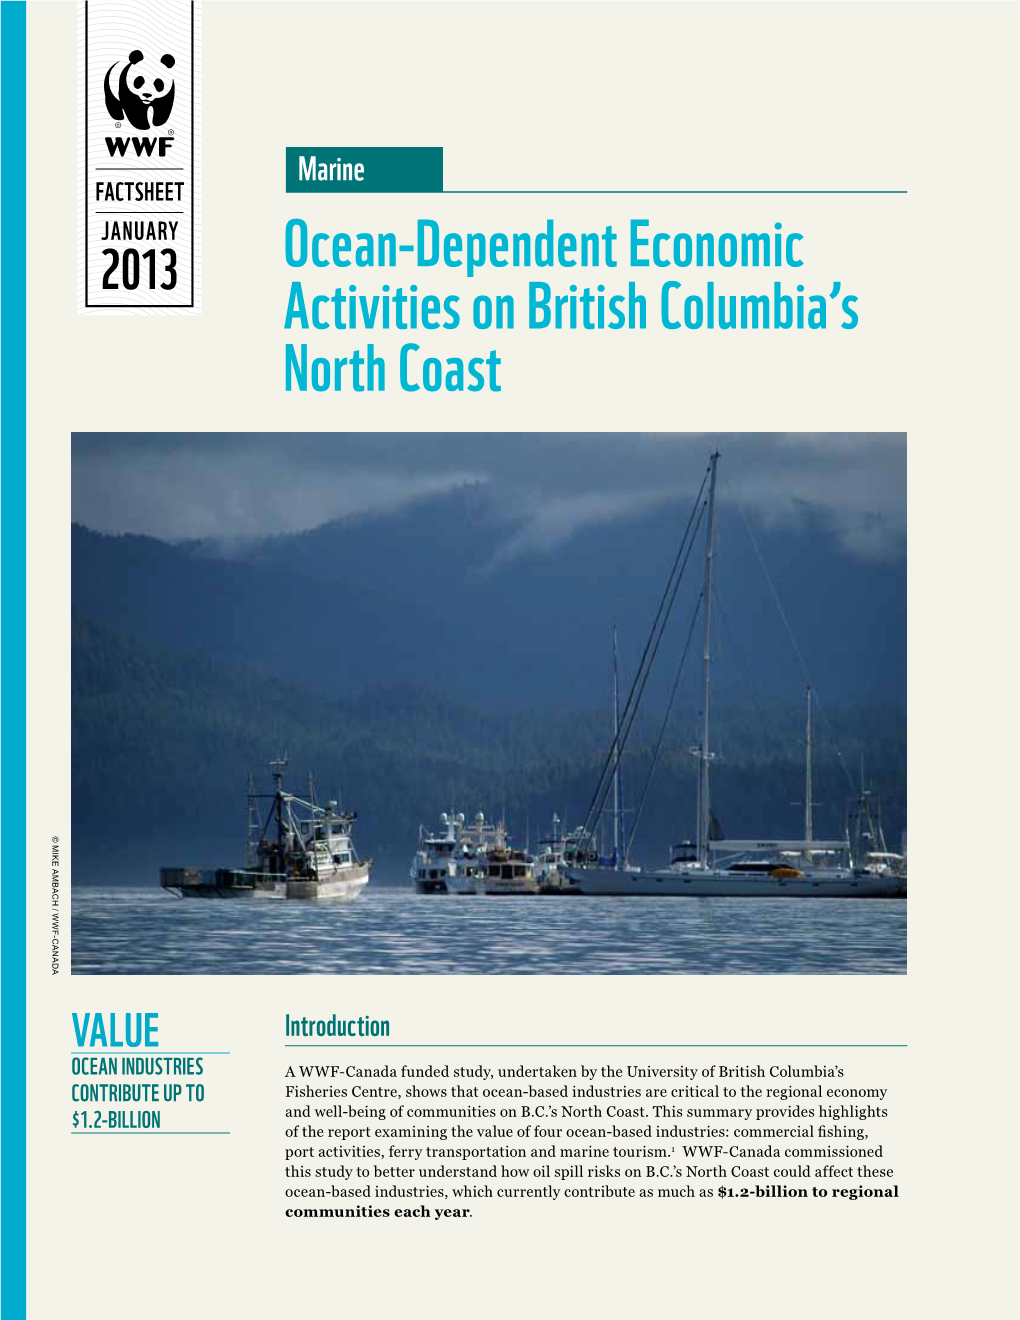 Ocean-Dependent Economic Activities on British Columbia's North Coast